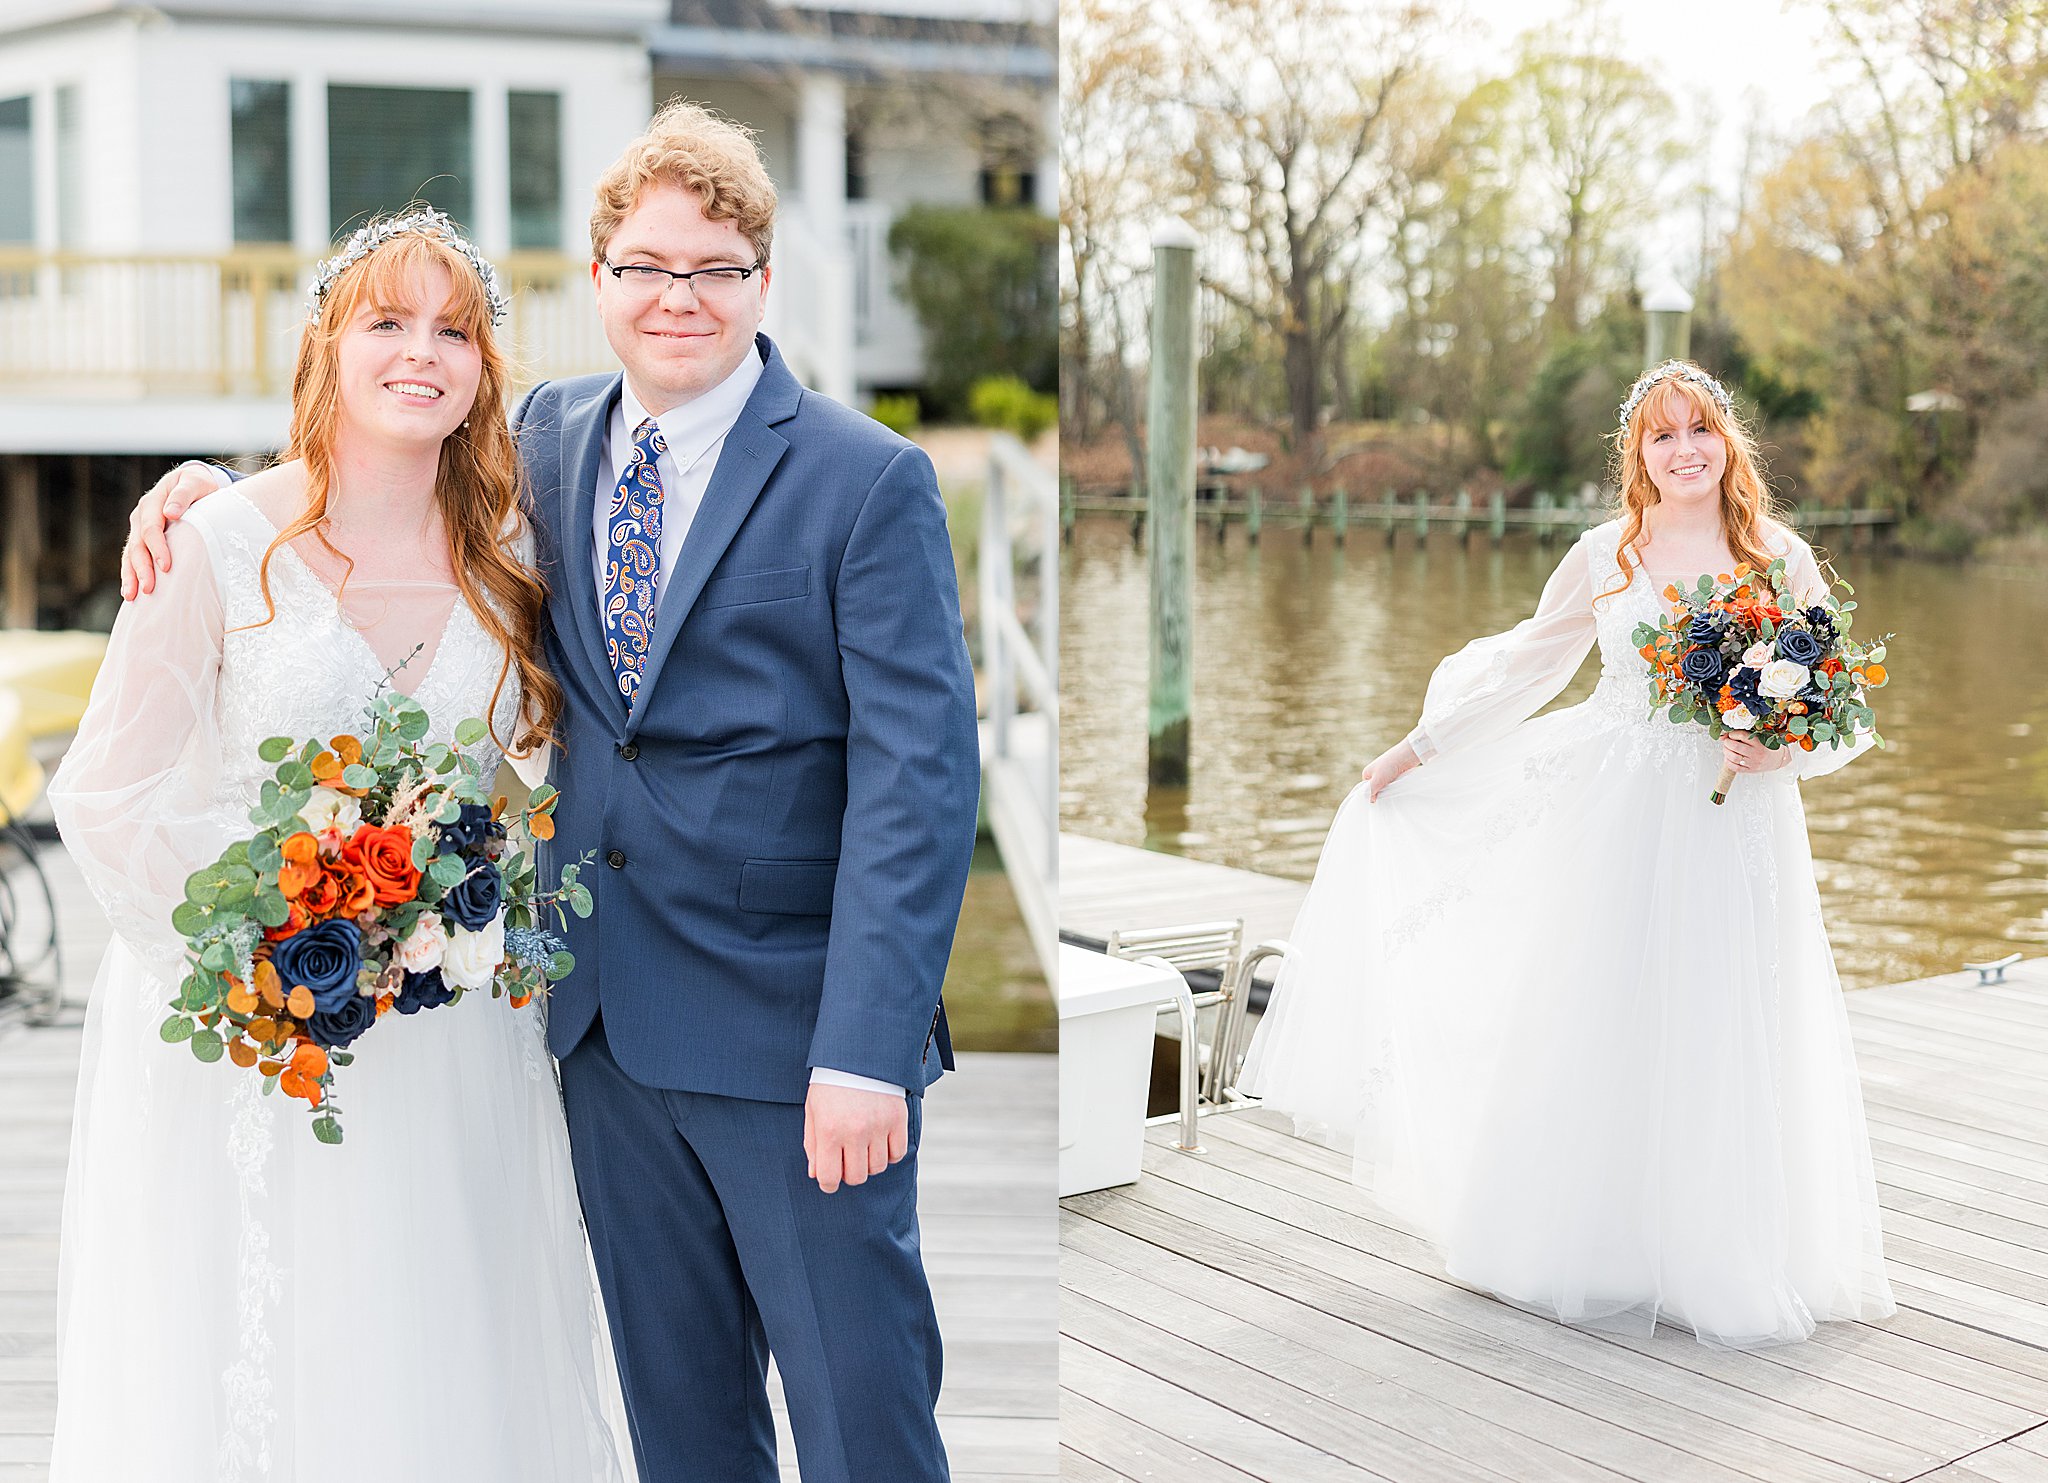 Steven & MacKenzie's Perfect Wedding Day at Deep Creek Landing Marina